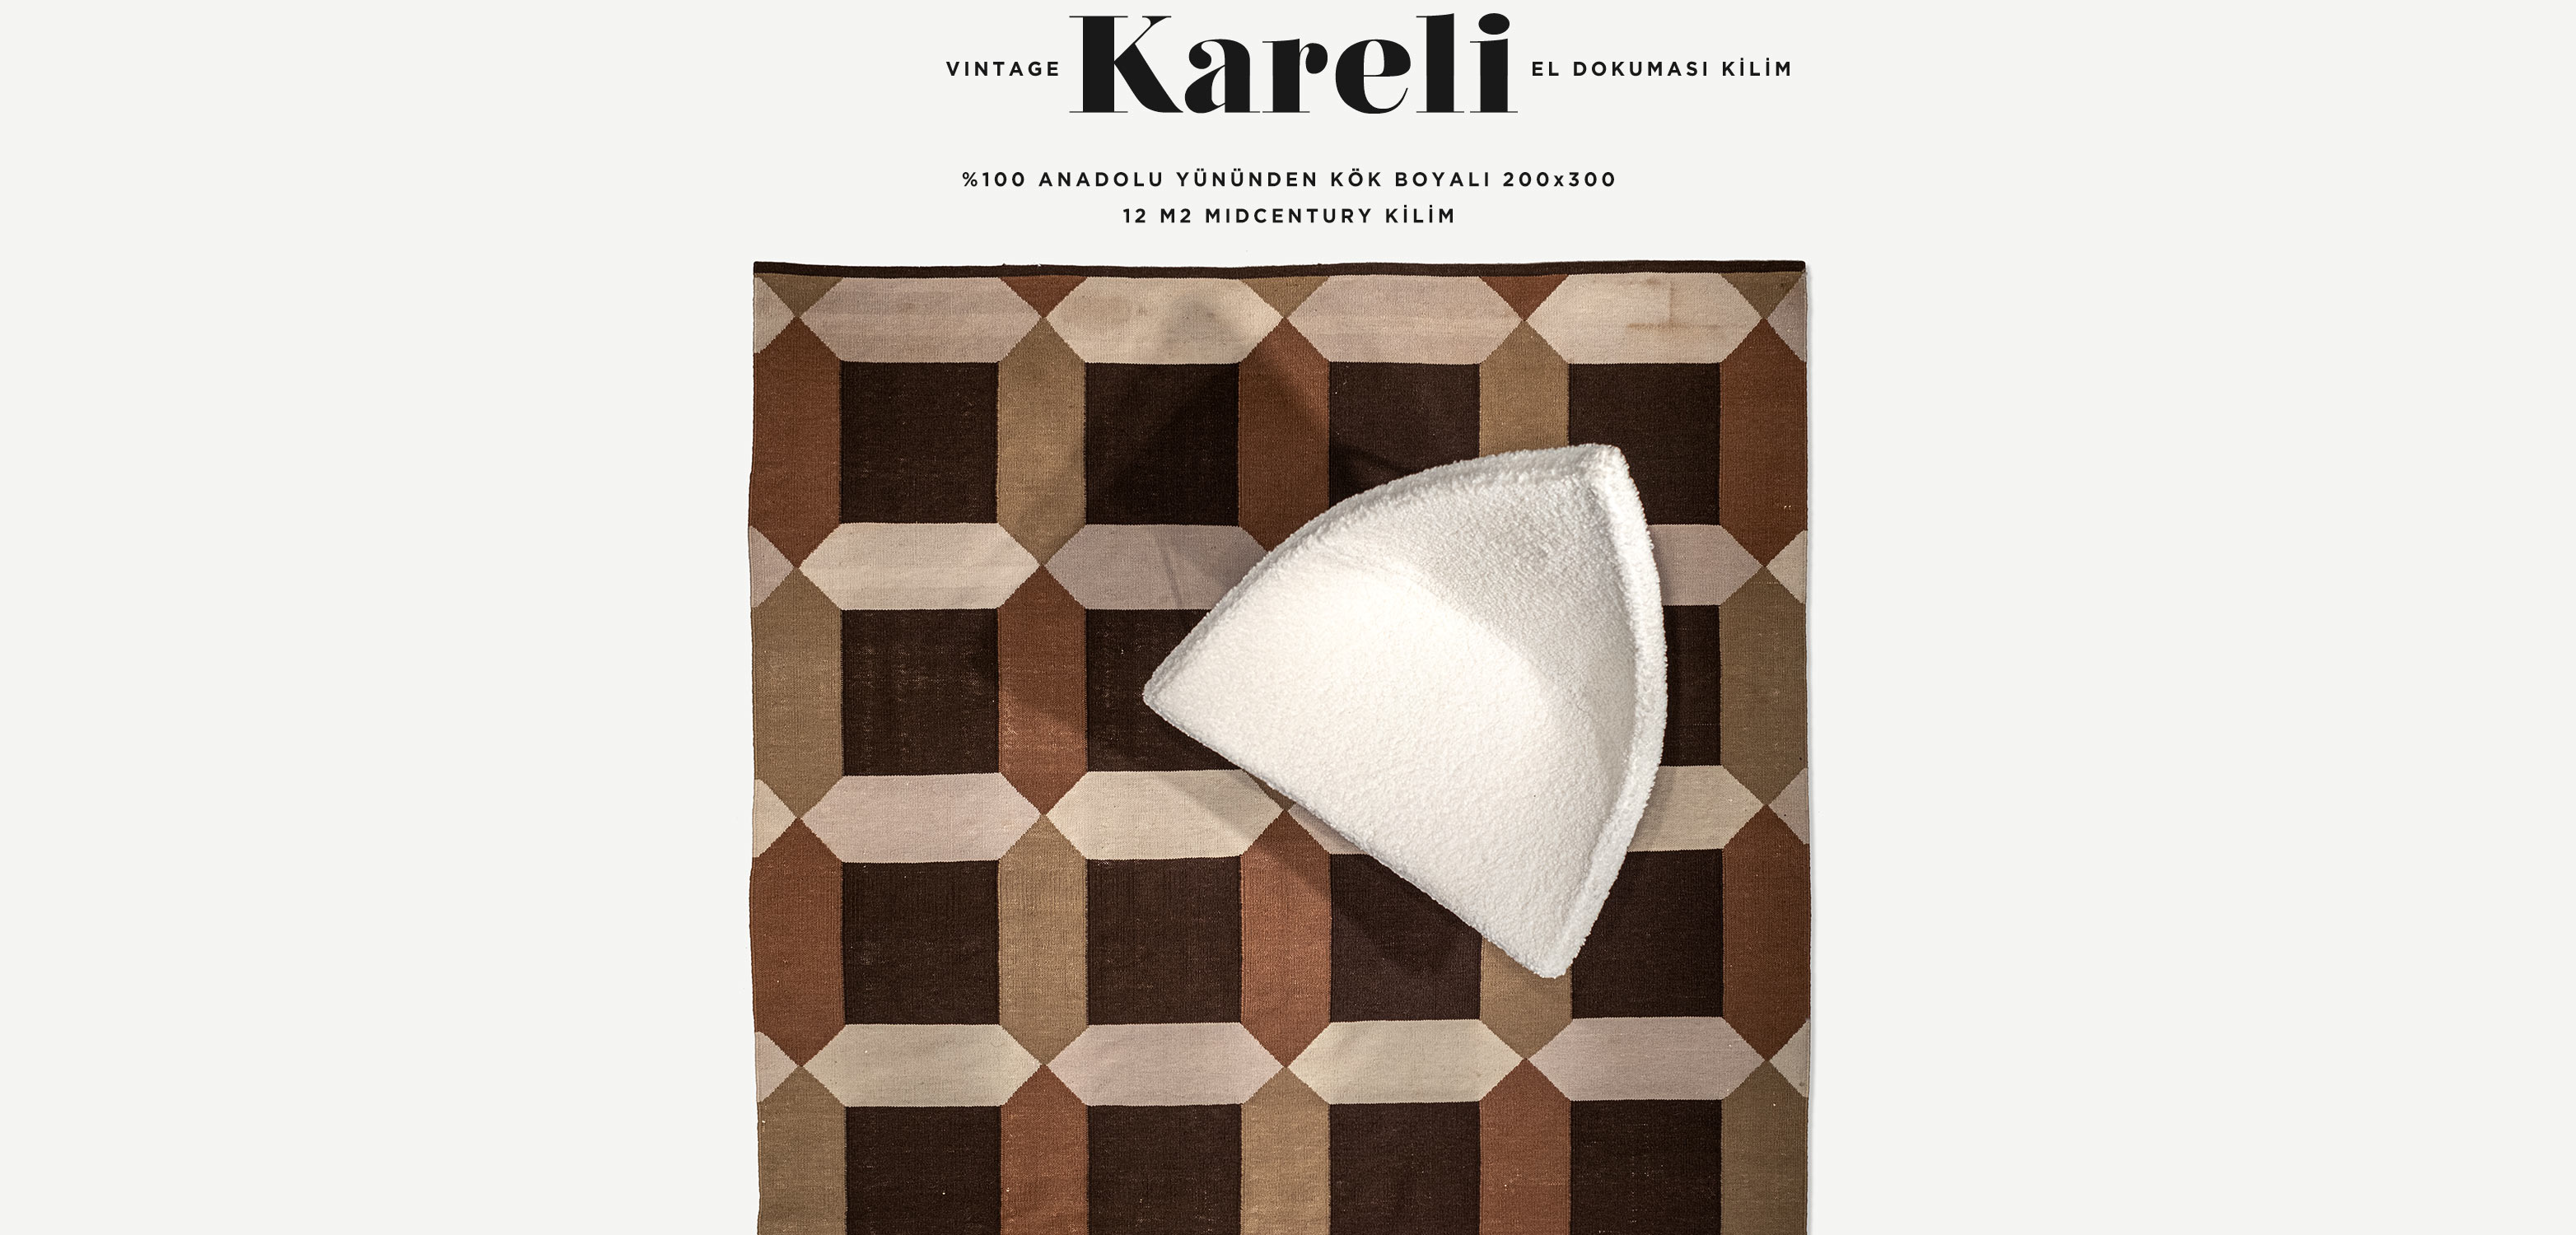 Vintage Kareli El Dokuması Kilim 200x300, 6 m2'in resmi